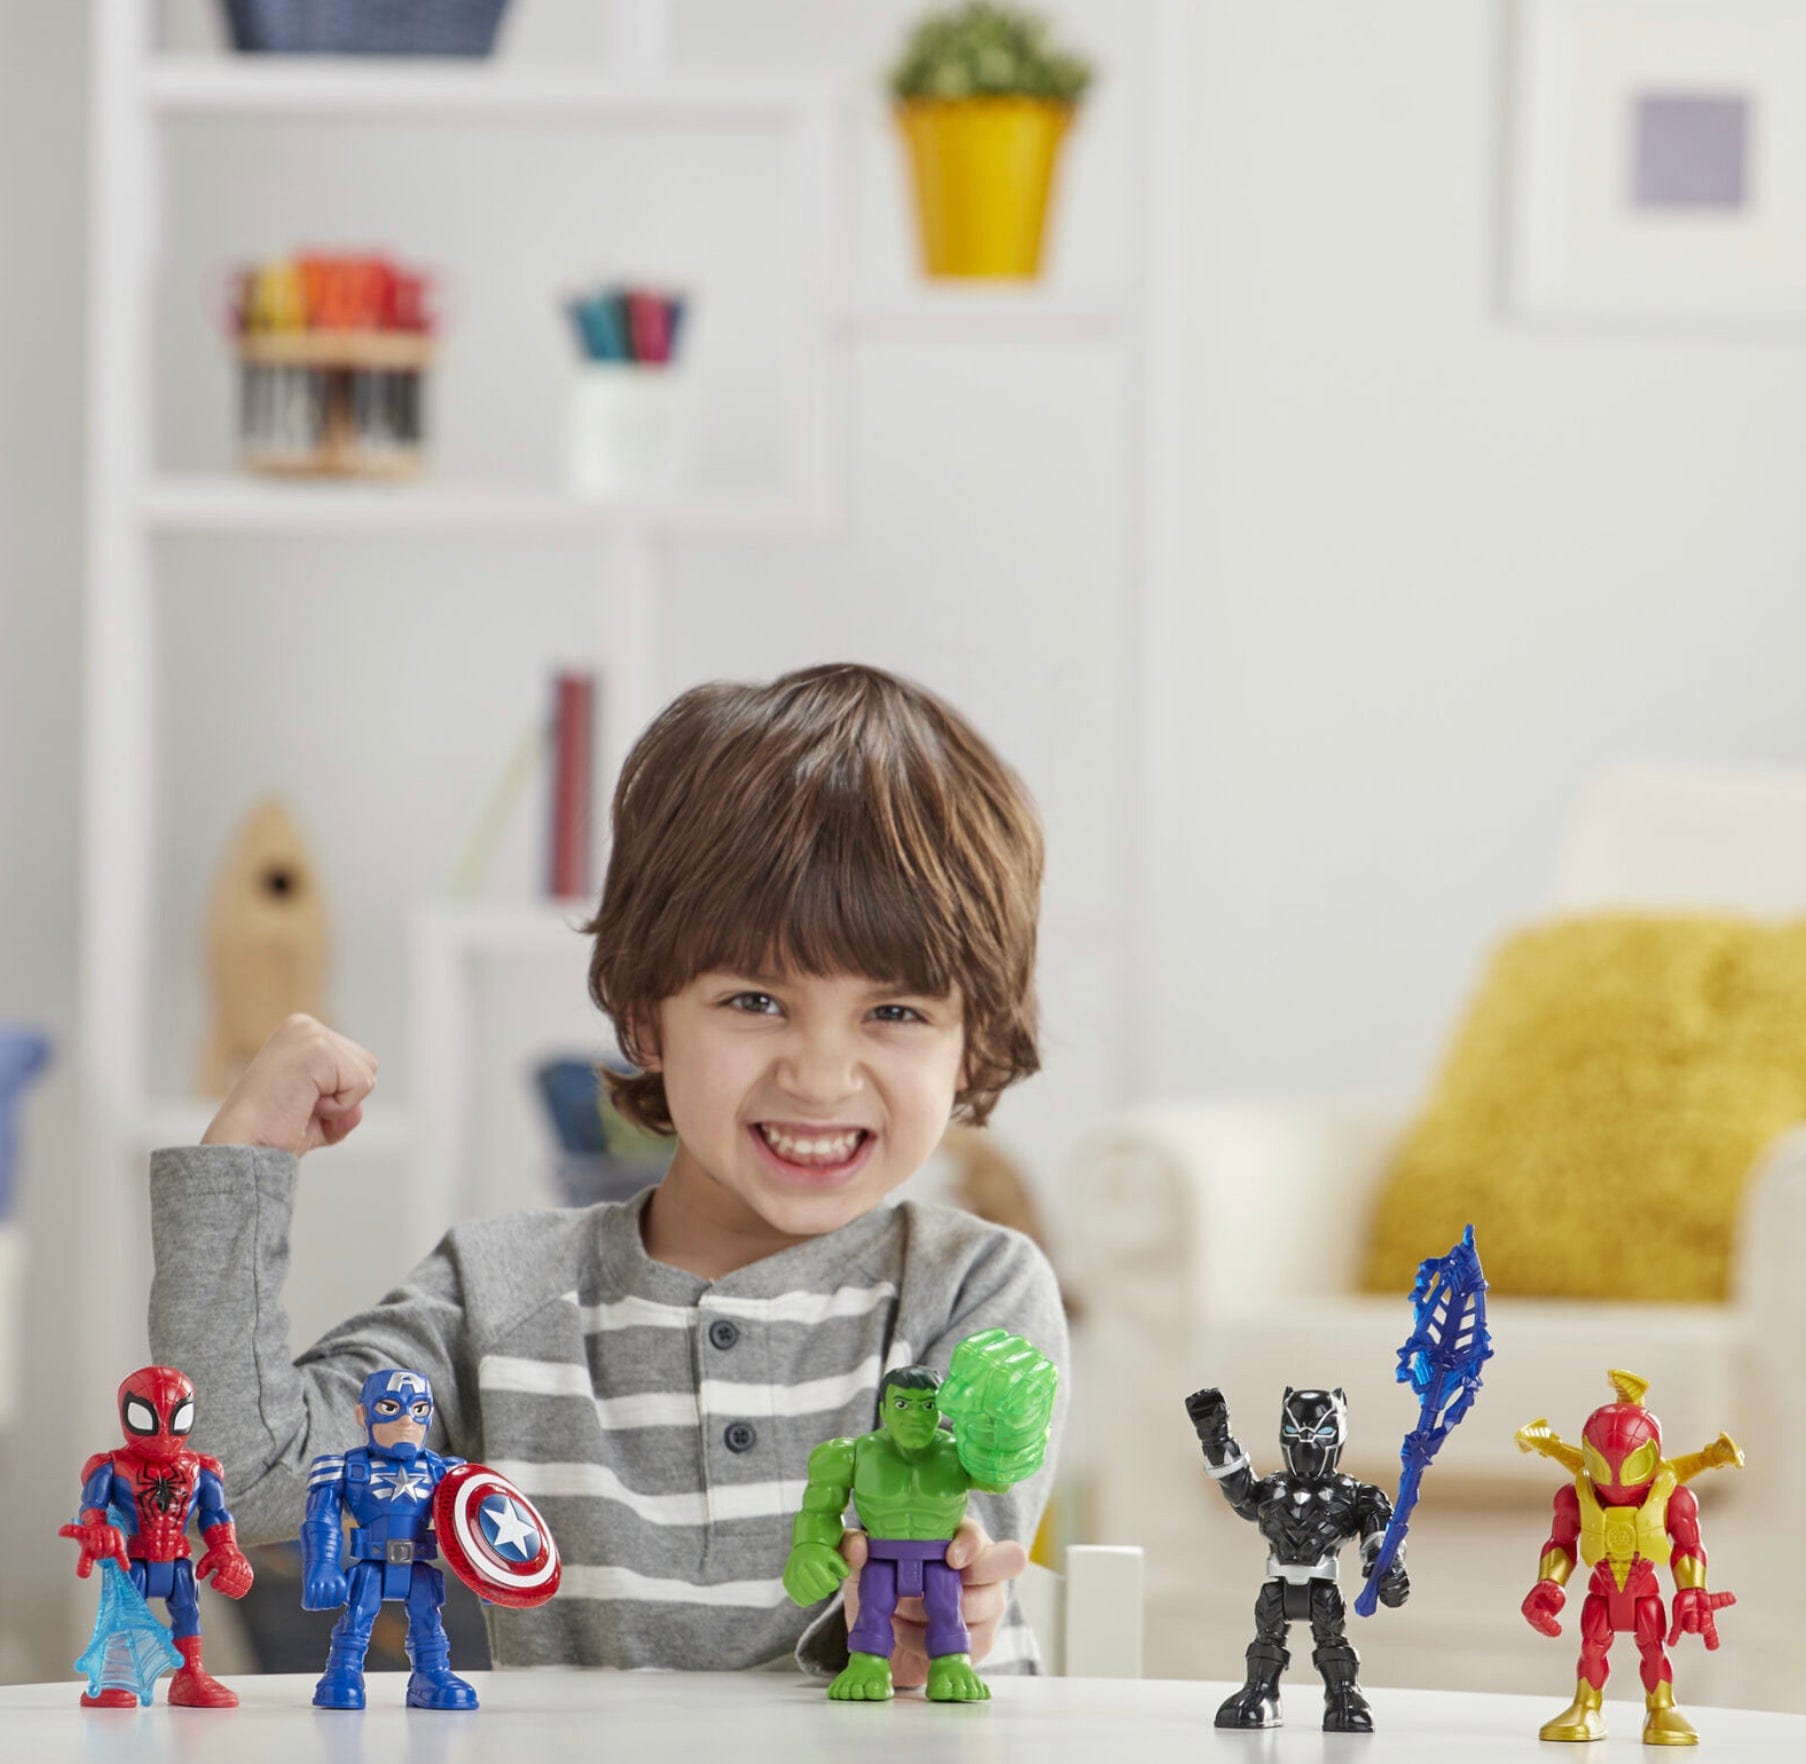 Marvel Super Hero Adventures toys, 12cm Spider-Man Action Figure & Web Accessory